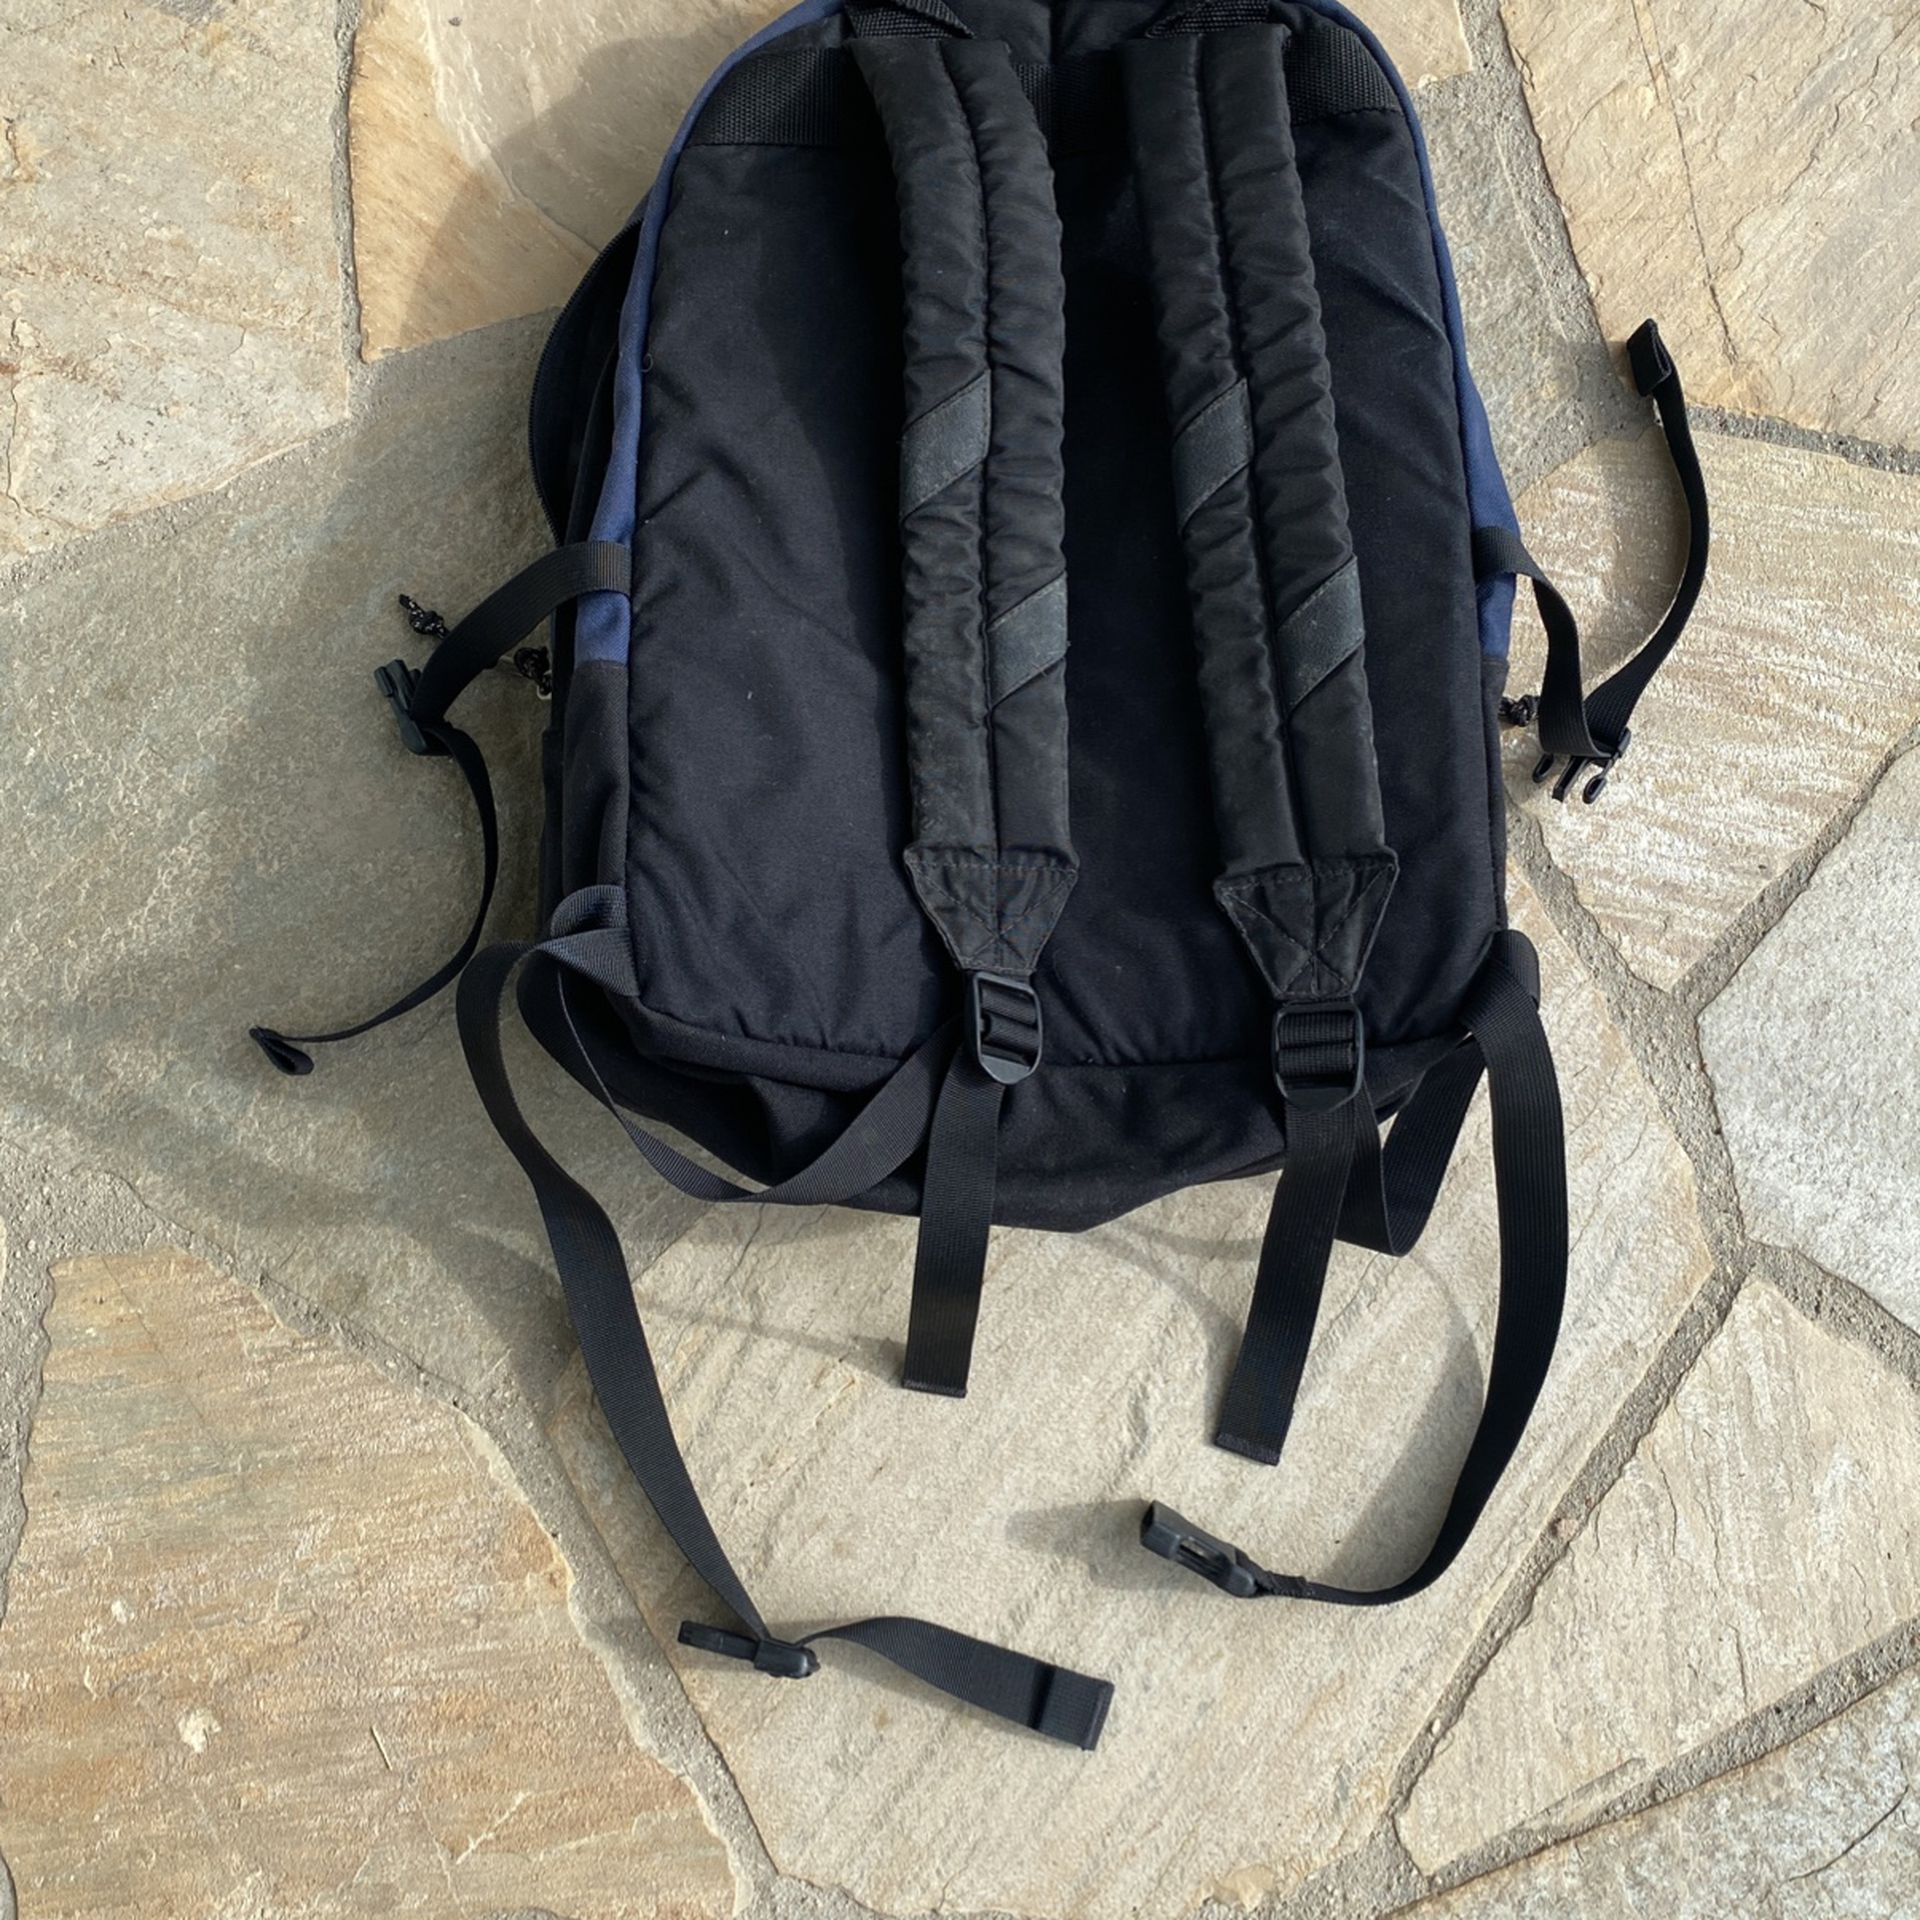 Backpack - school or hiking